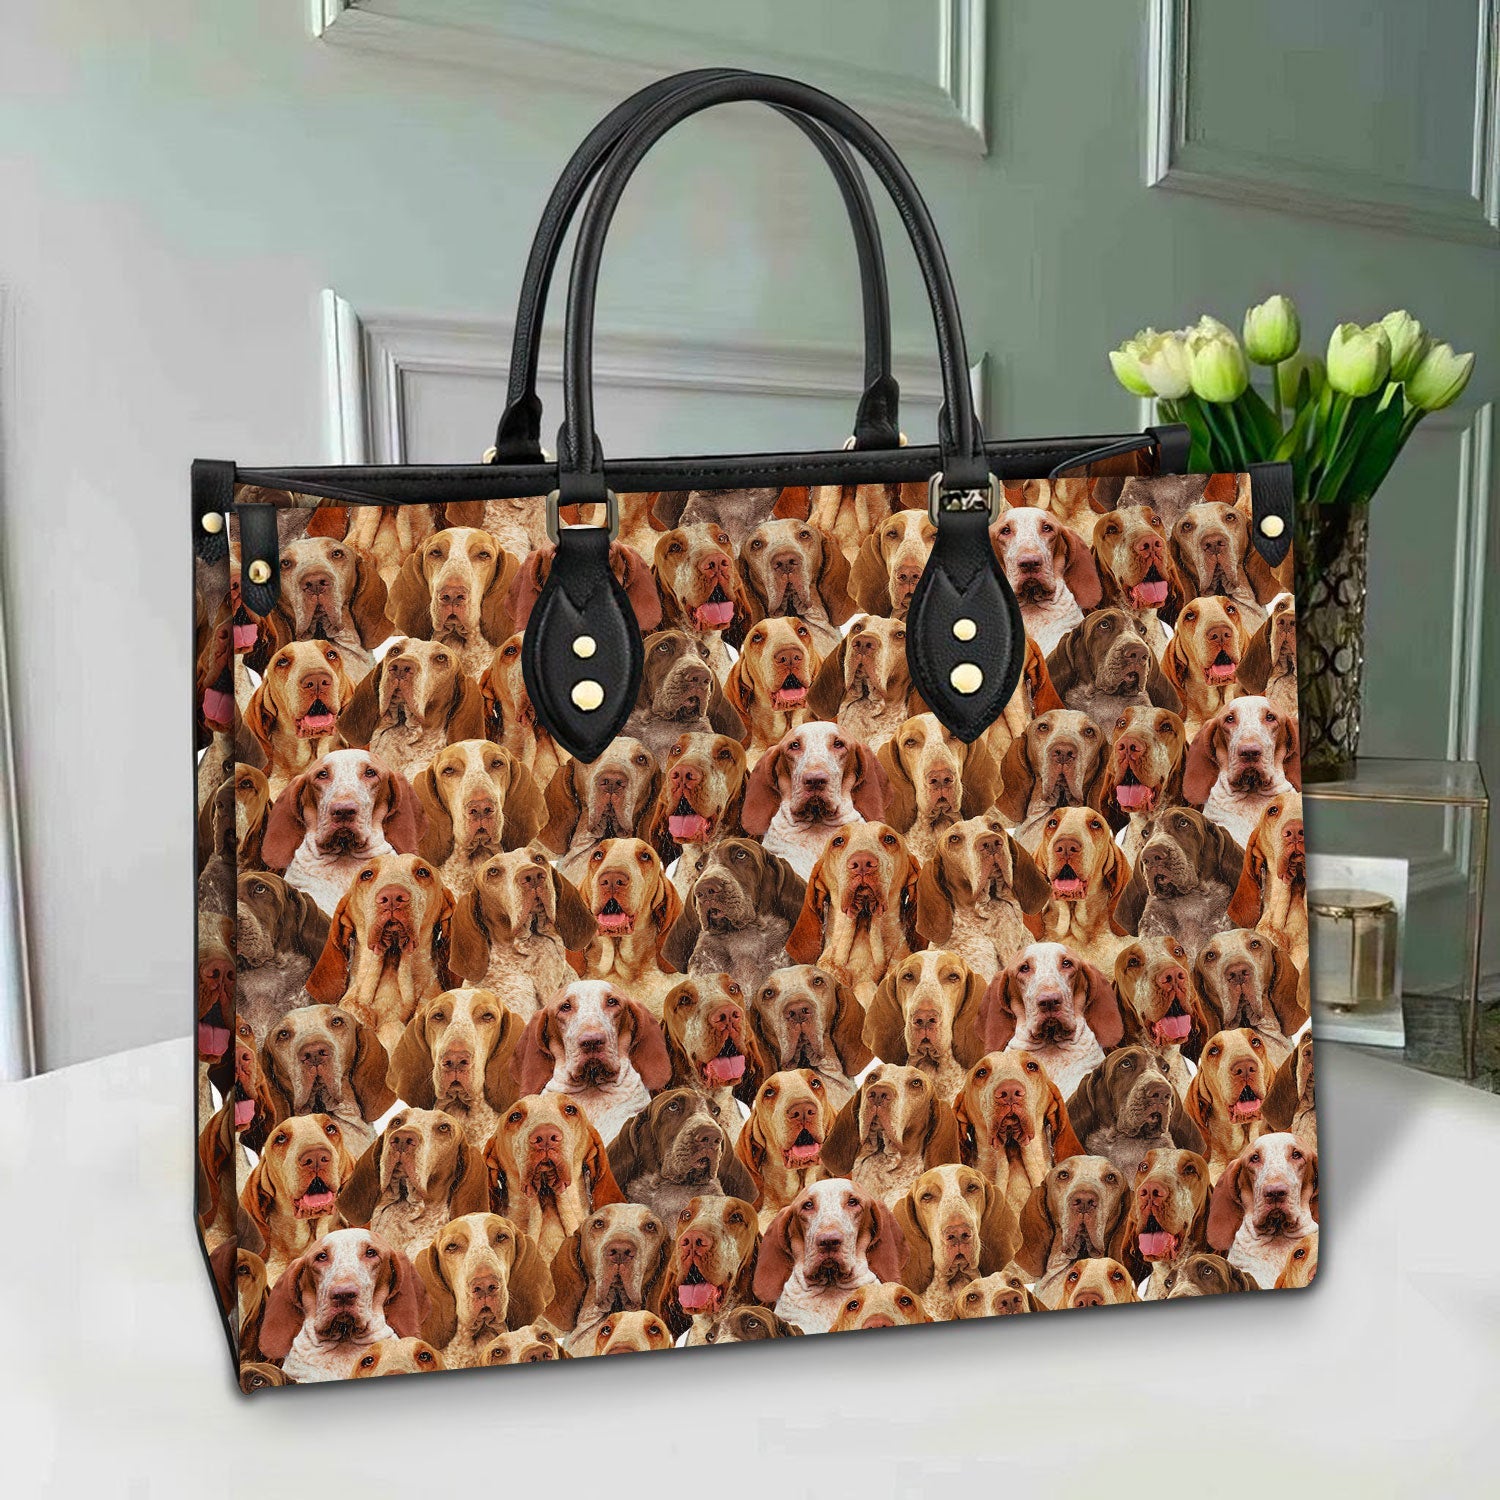 Bracco Italiano Leather Bag - Animals Kind